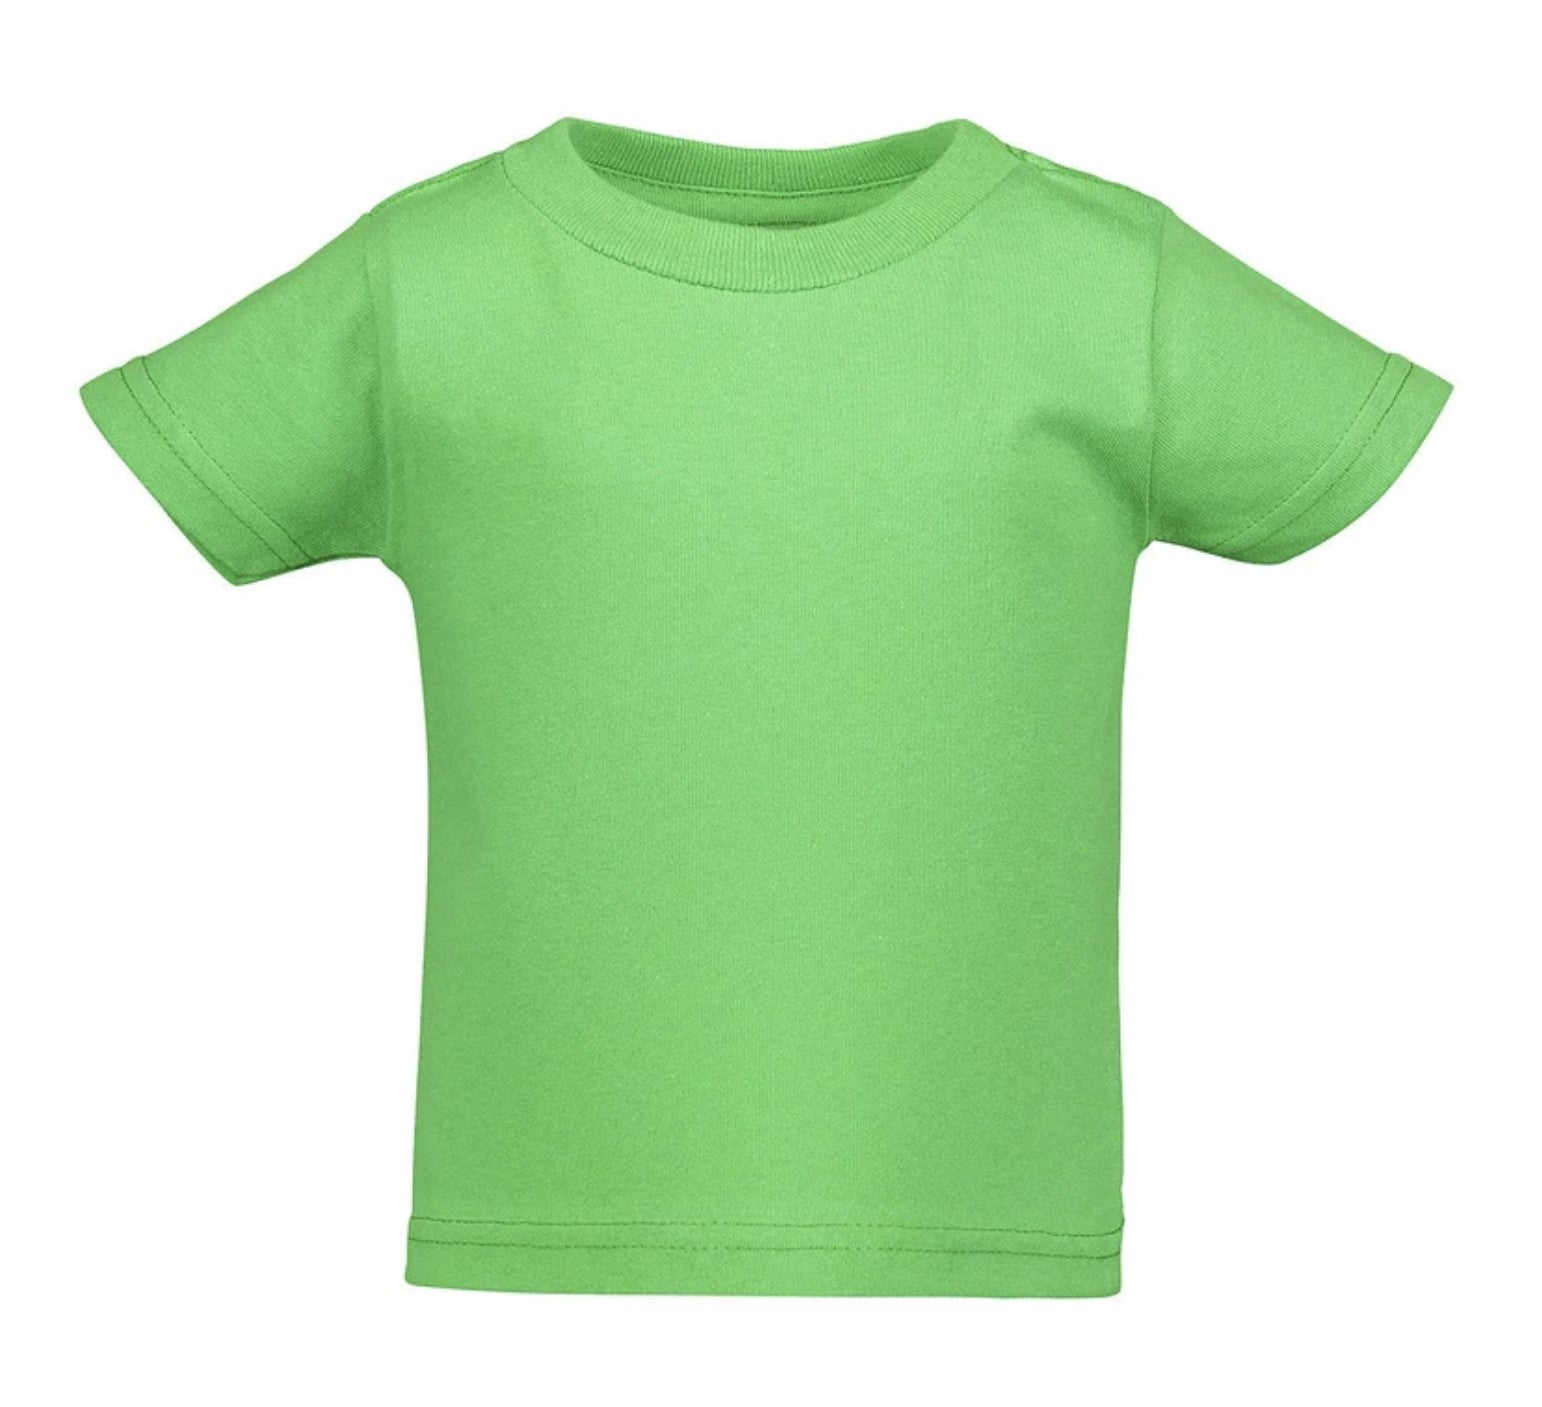 Toddler Jersey T-shirt, 100% Cotton, Apple